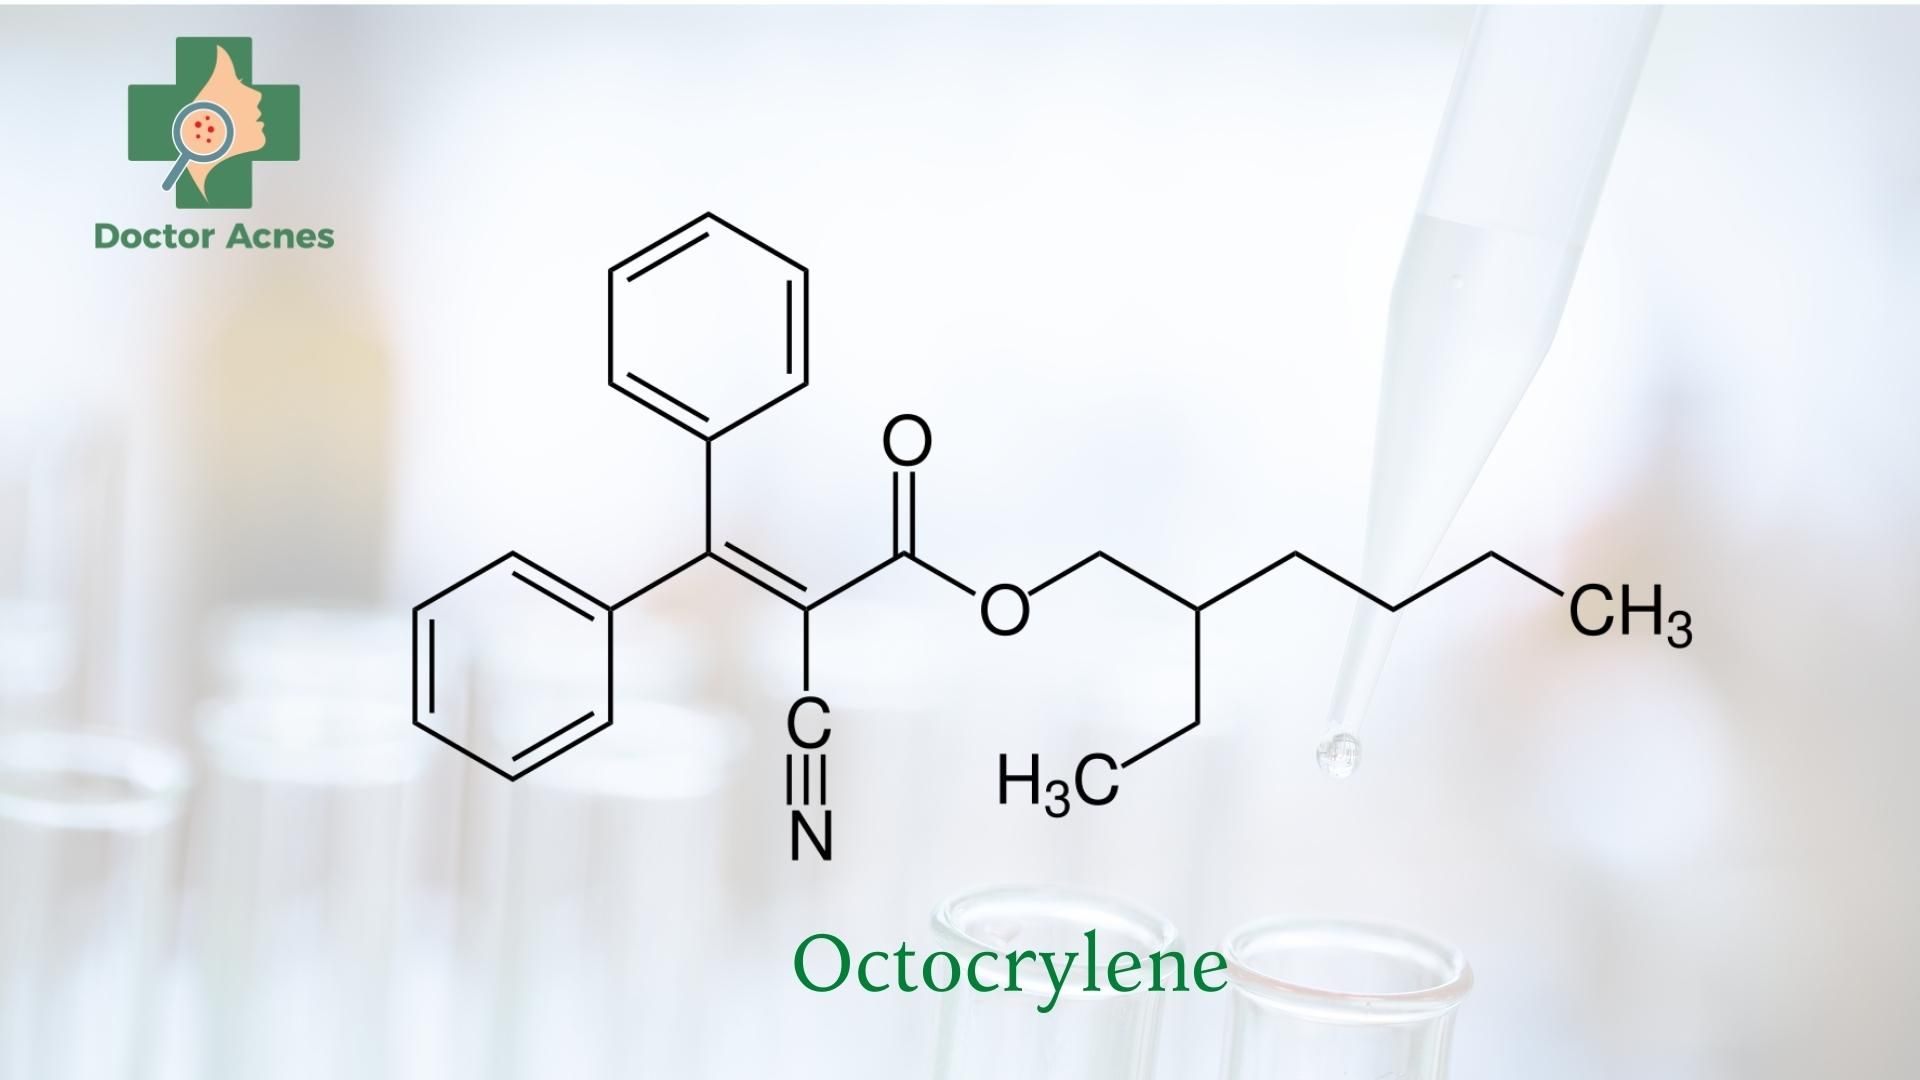 Octocrylene - Doctor Acnes